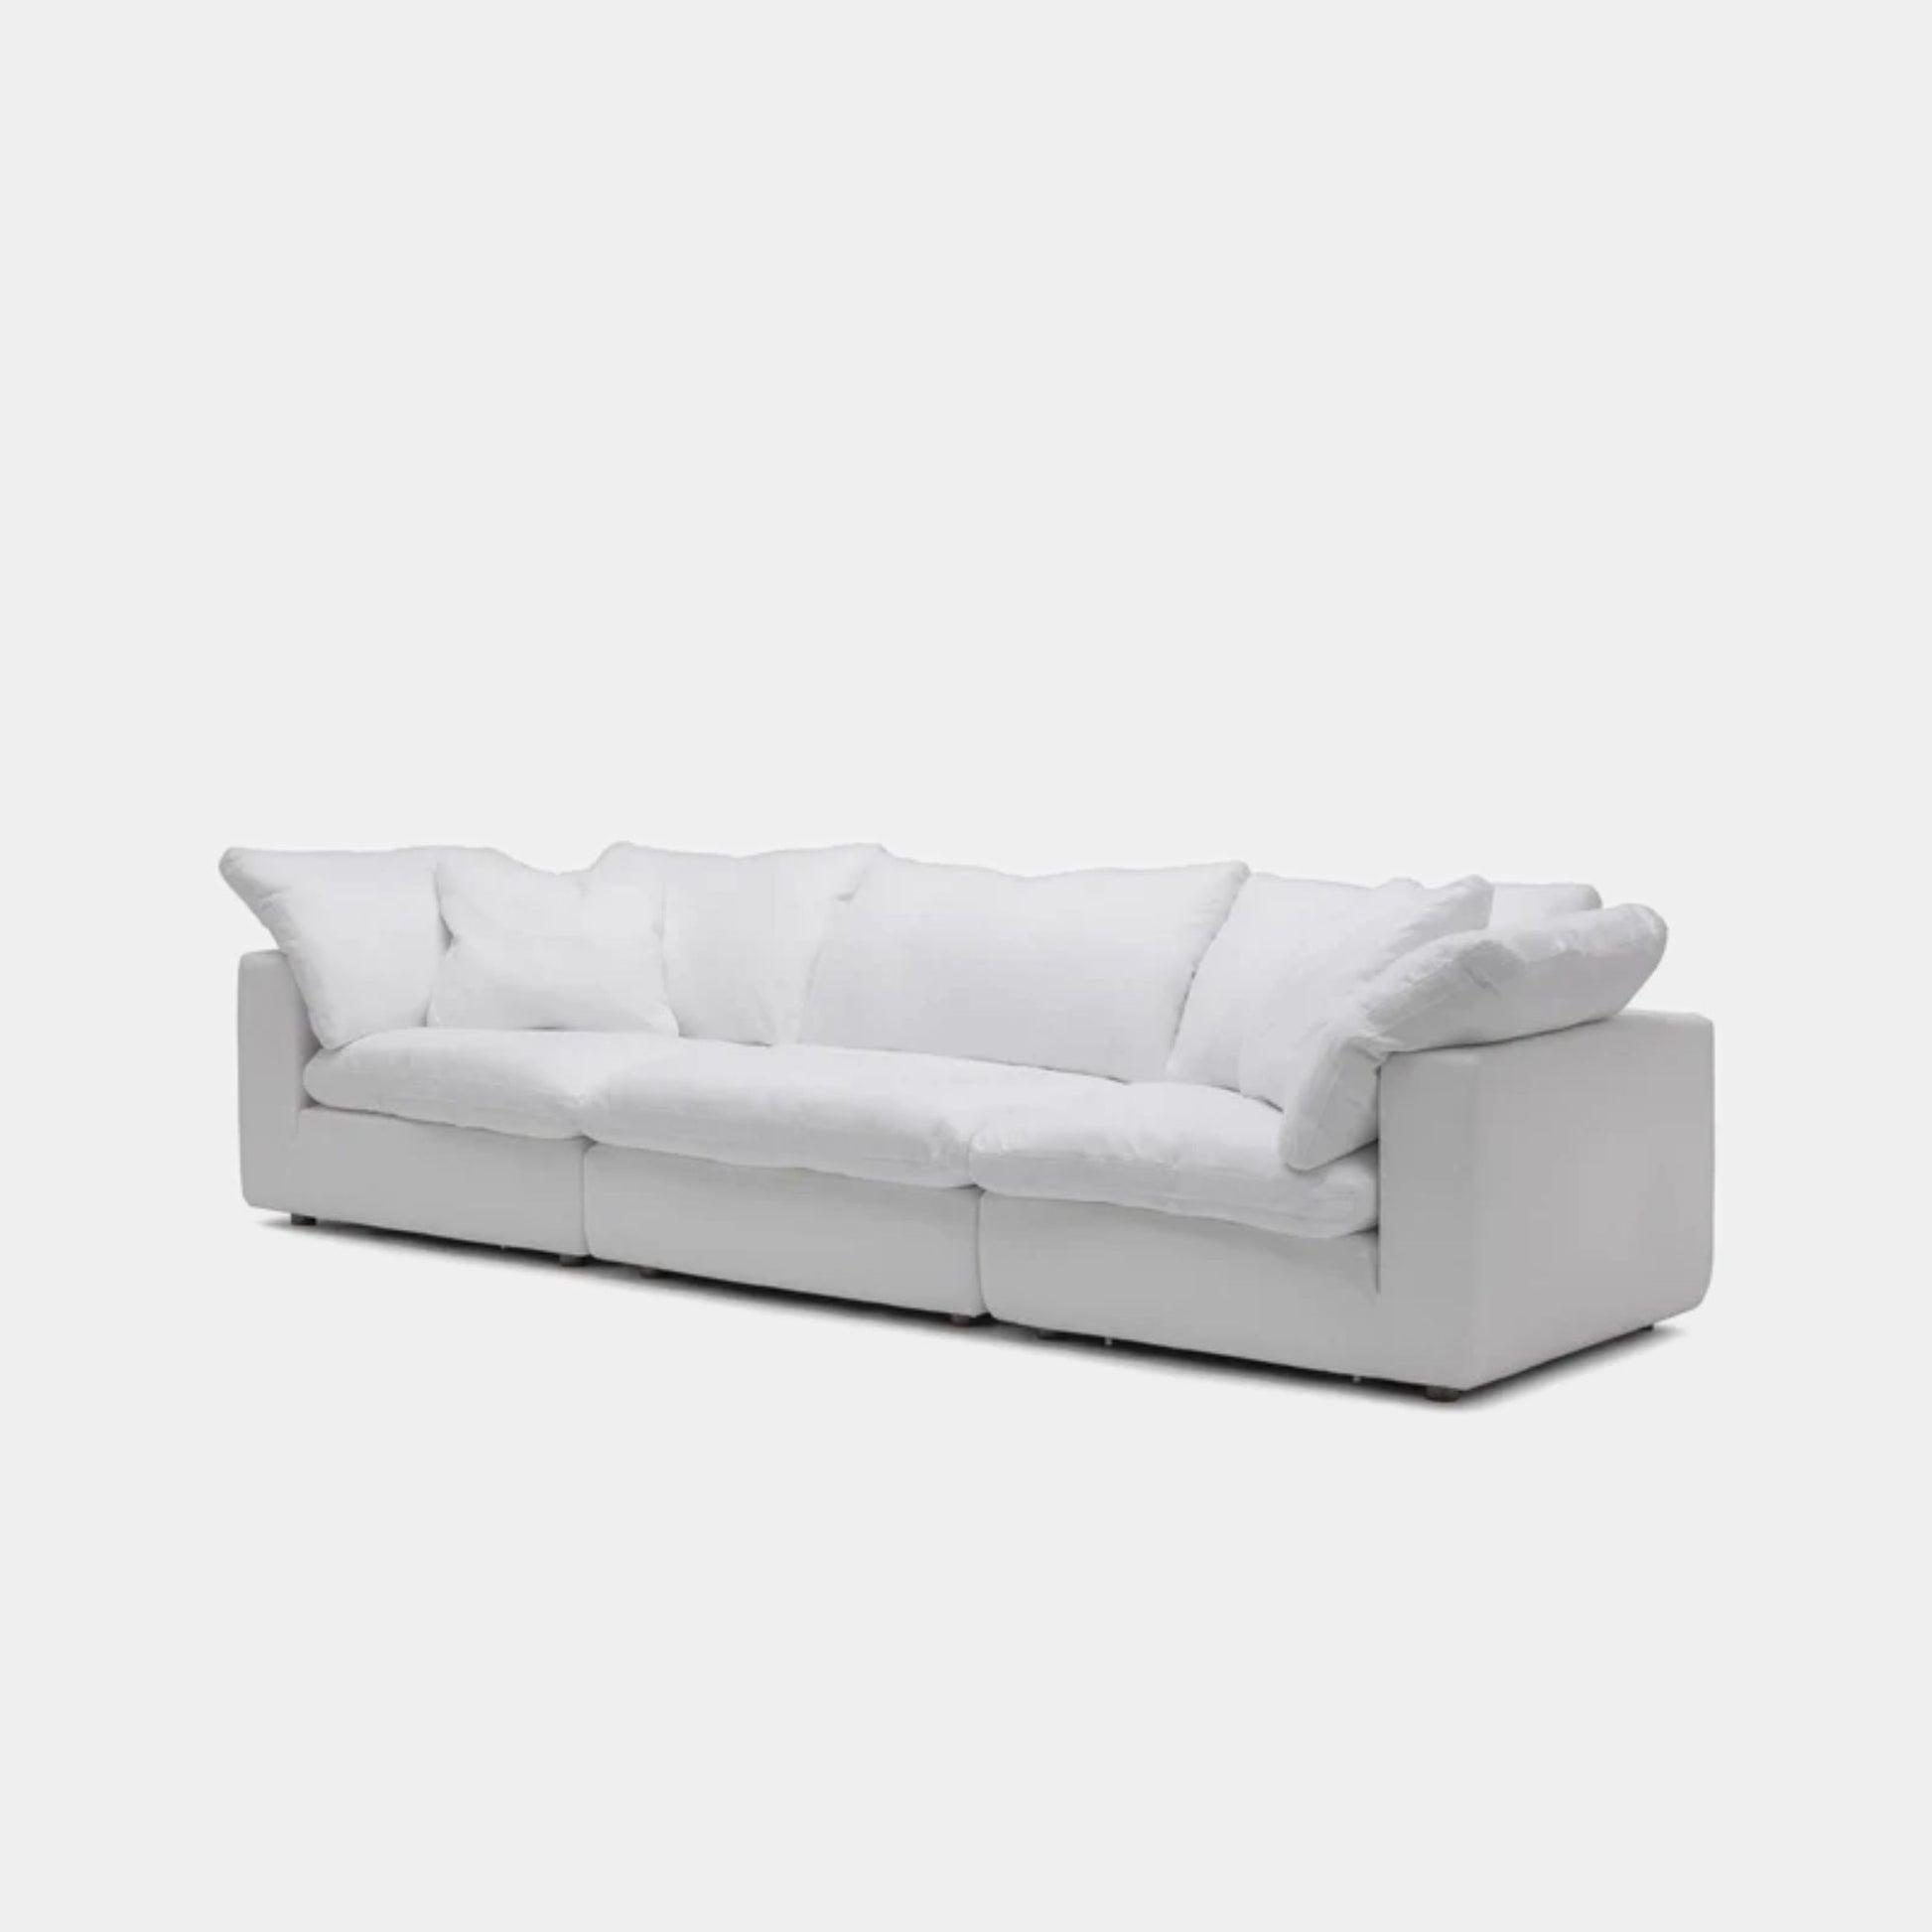 Cloud fabric 3 seat sofa white